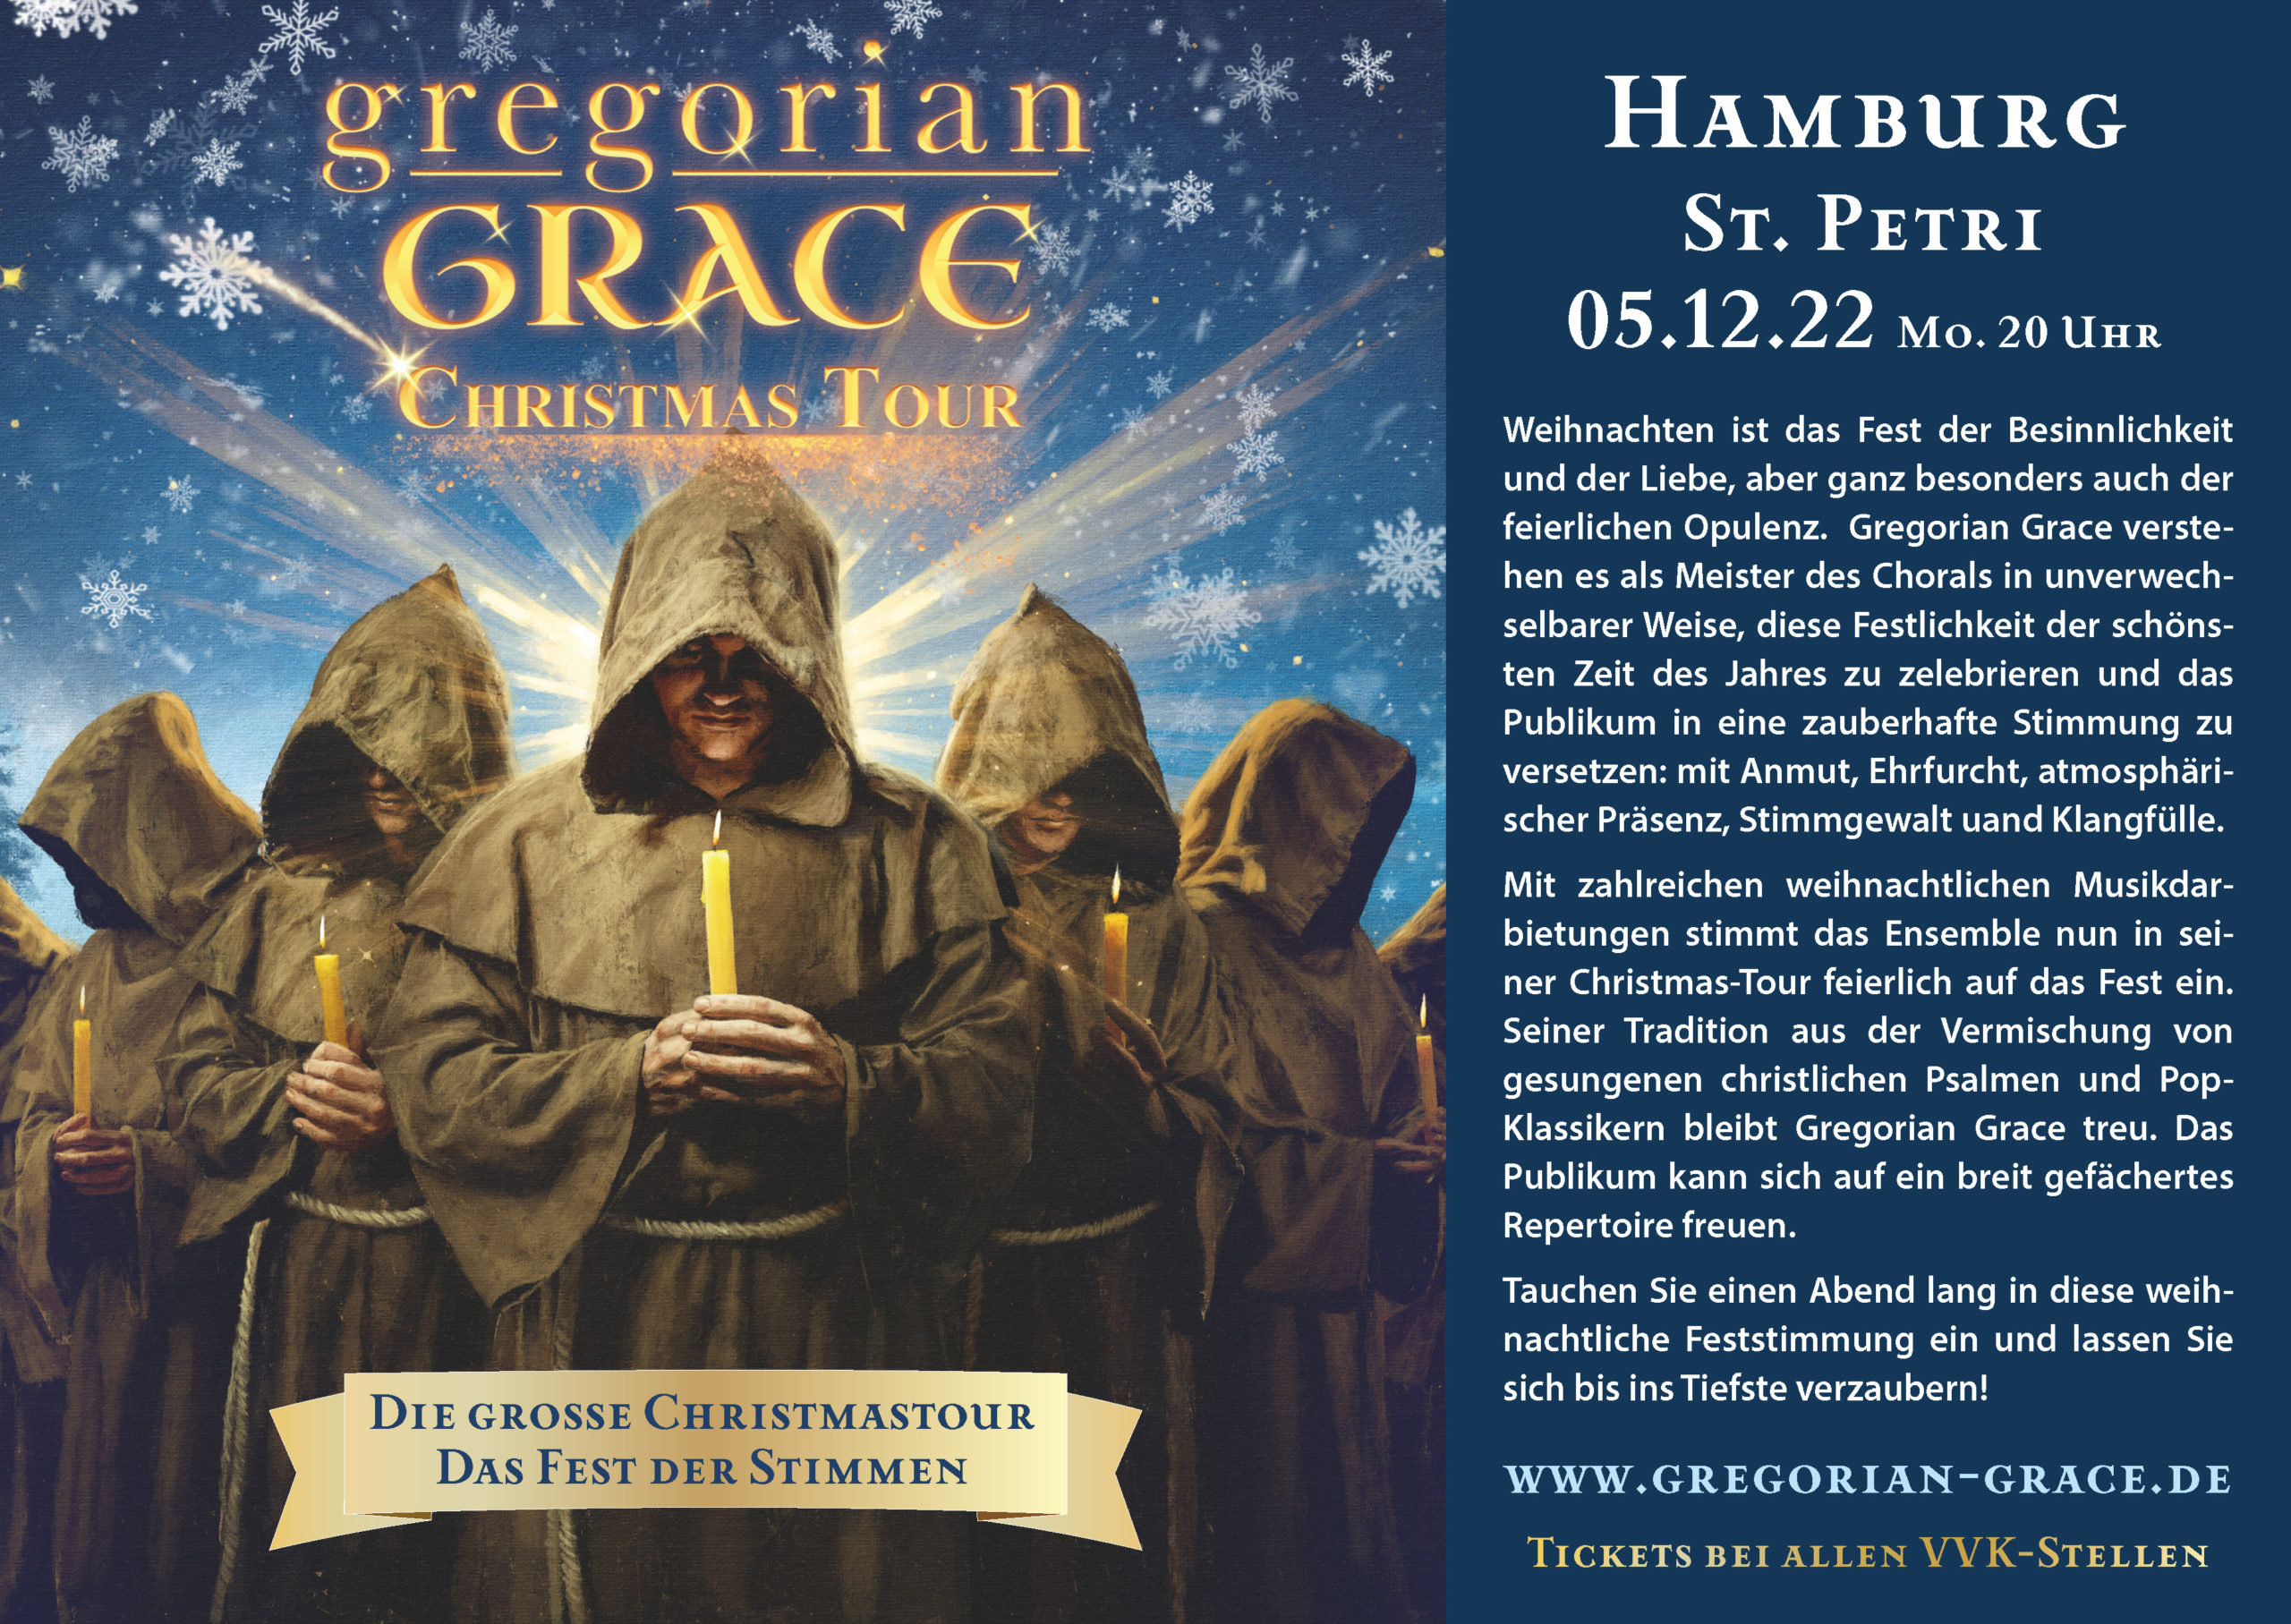 Hamburg St. Petri: Gregorian Grace "Christmas Tour"